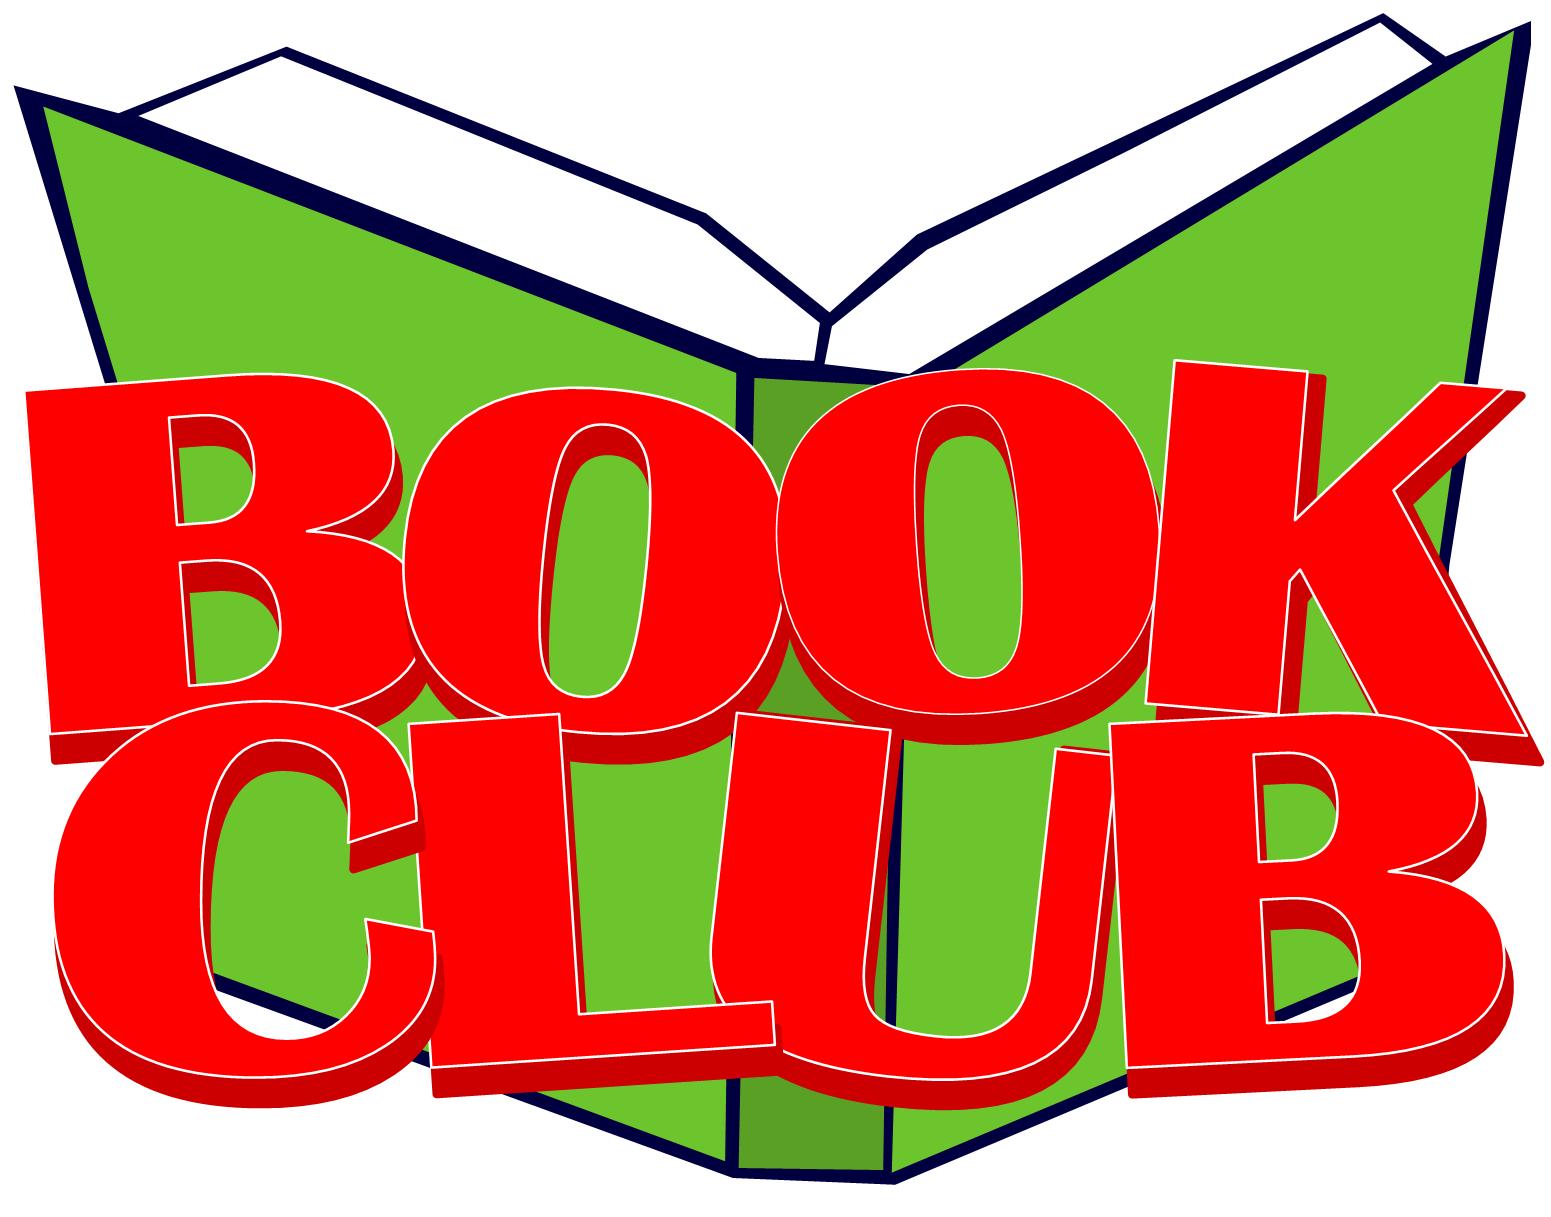 ... Book Club Clip Art ... - Book Club Clip Art